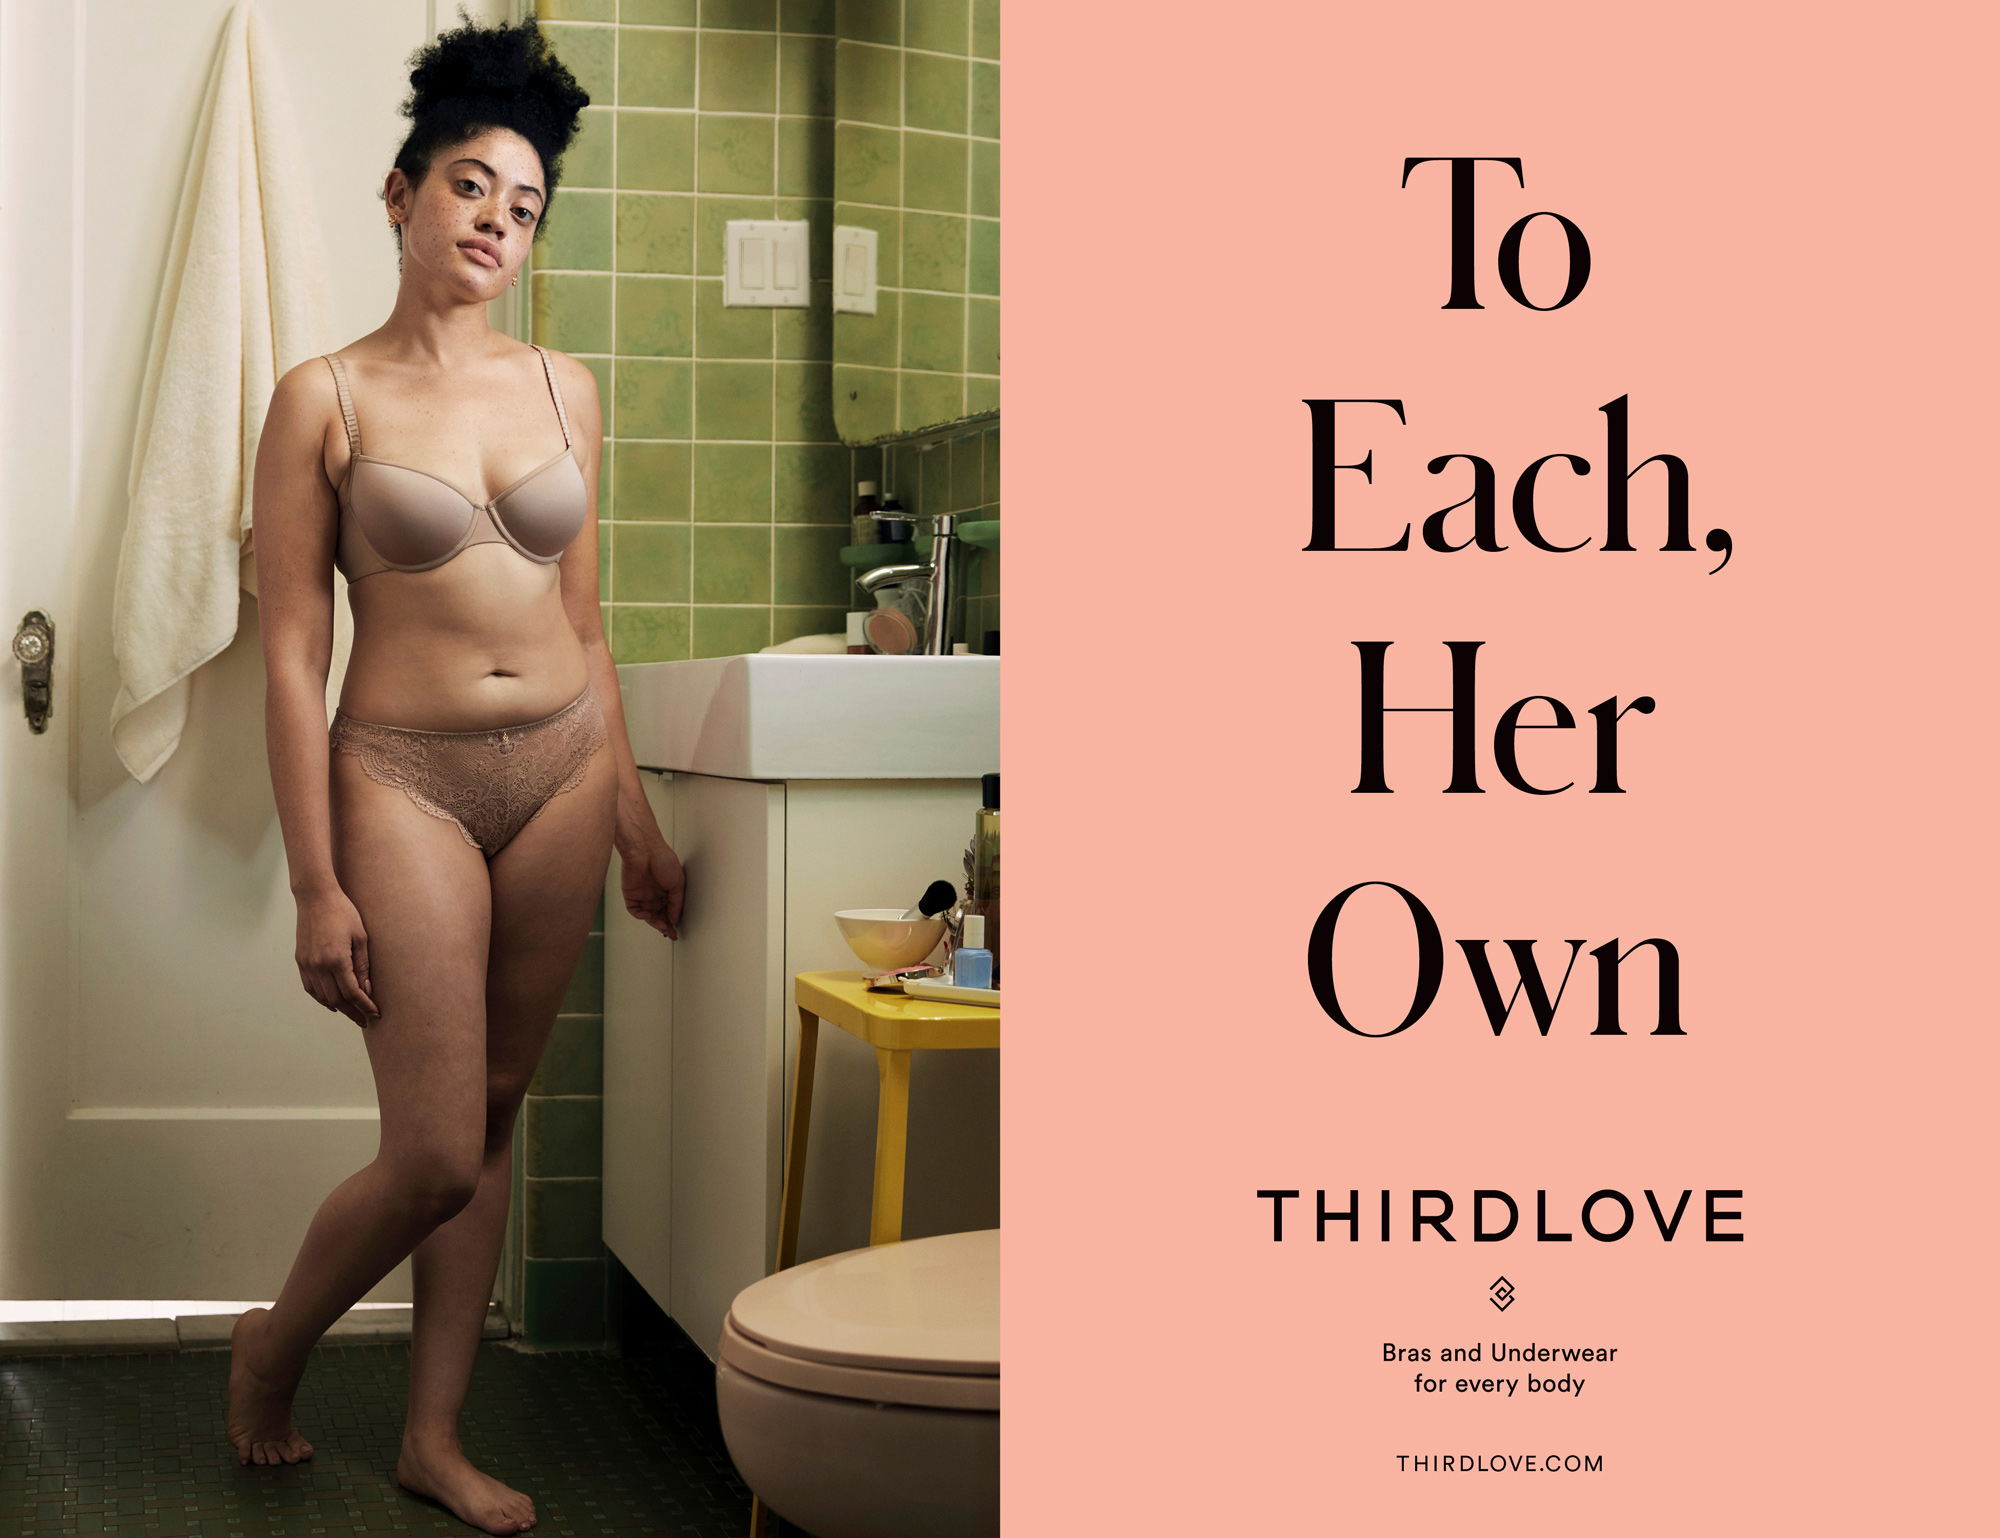 ThirdLove - Entrepreneur and model, Devin, hand-selected each bra